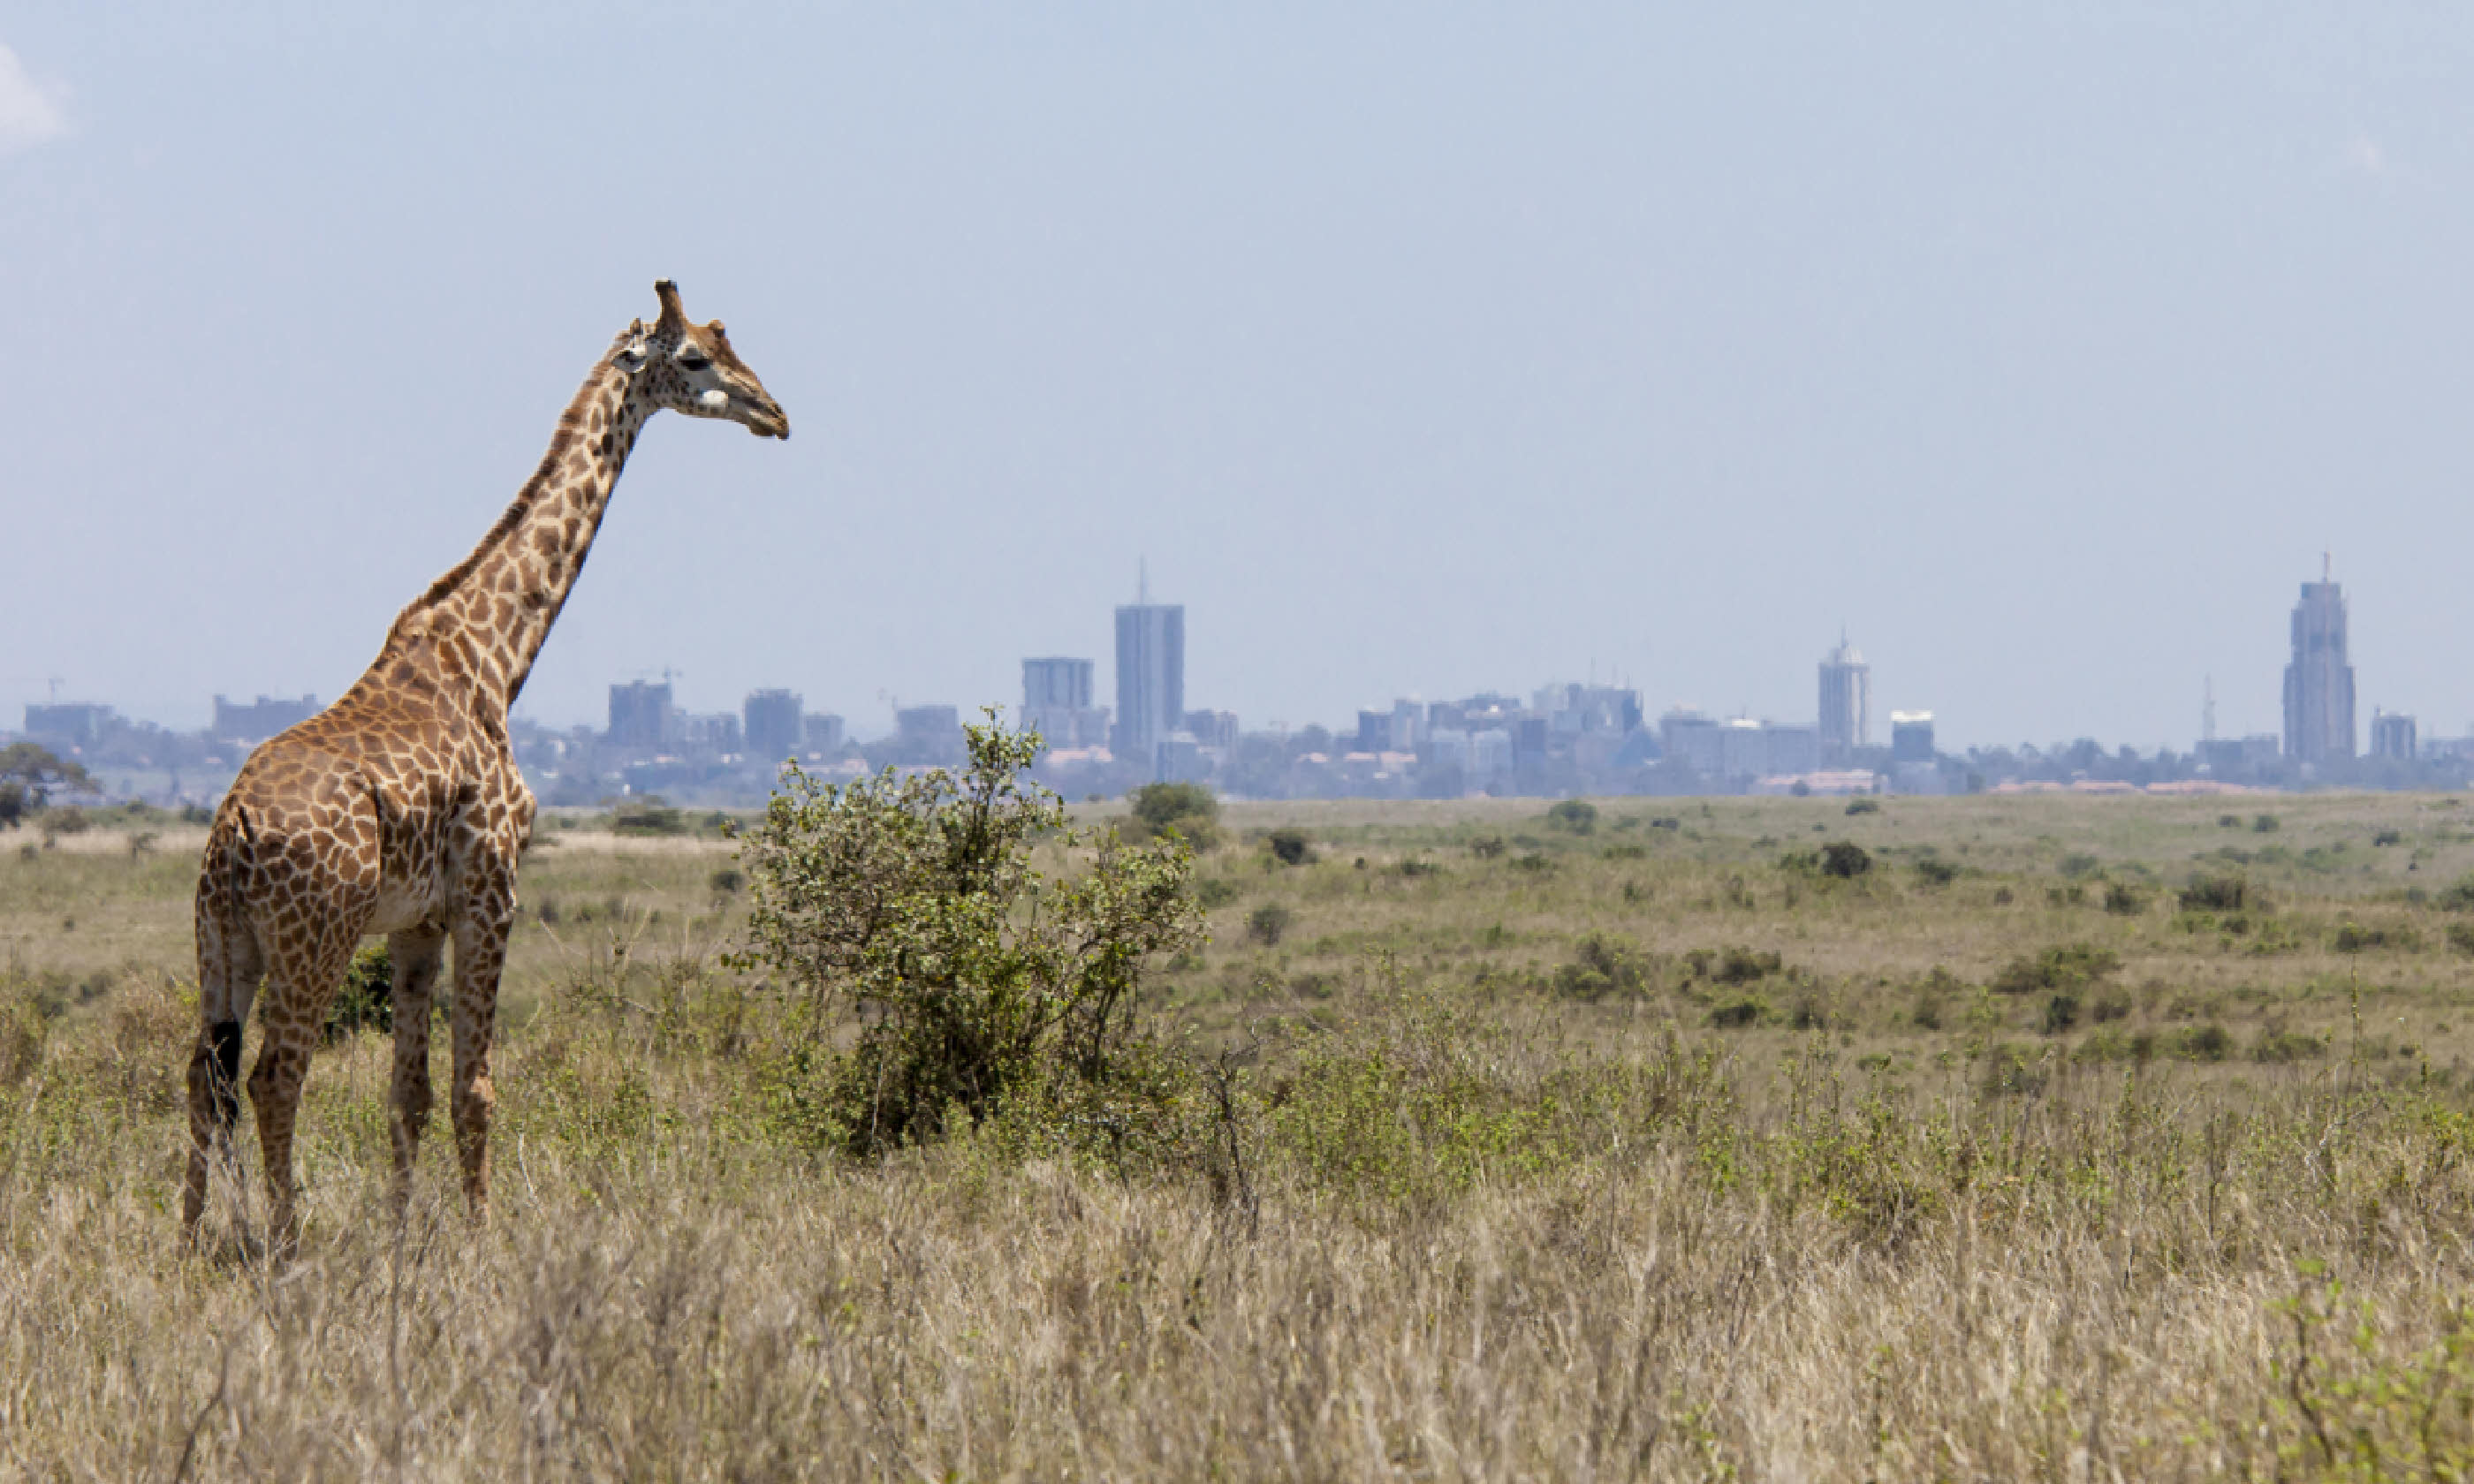 Giraffe in Nairobi National Park (Shutterstock: see credit below)